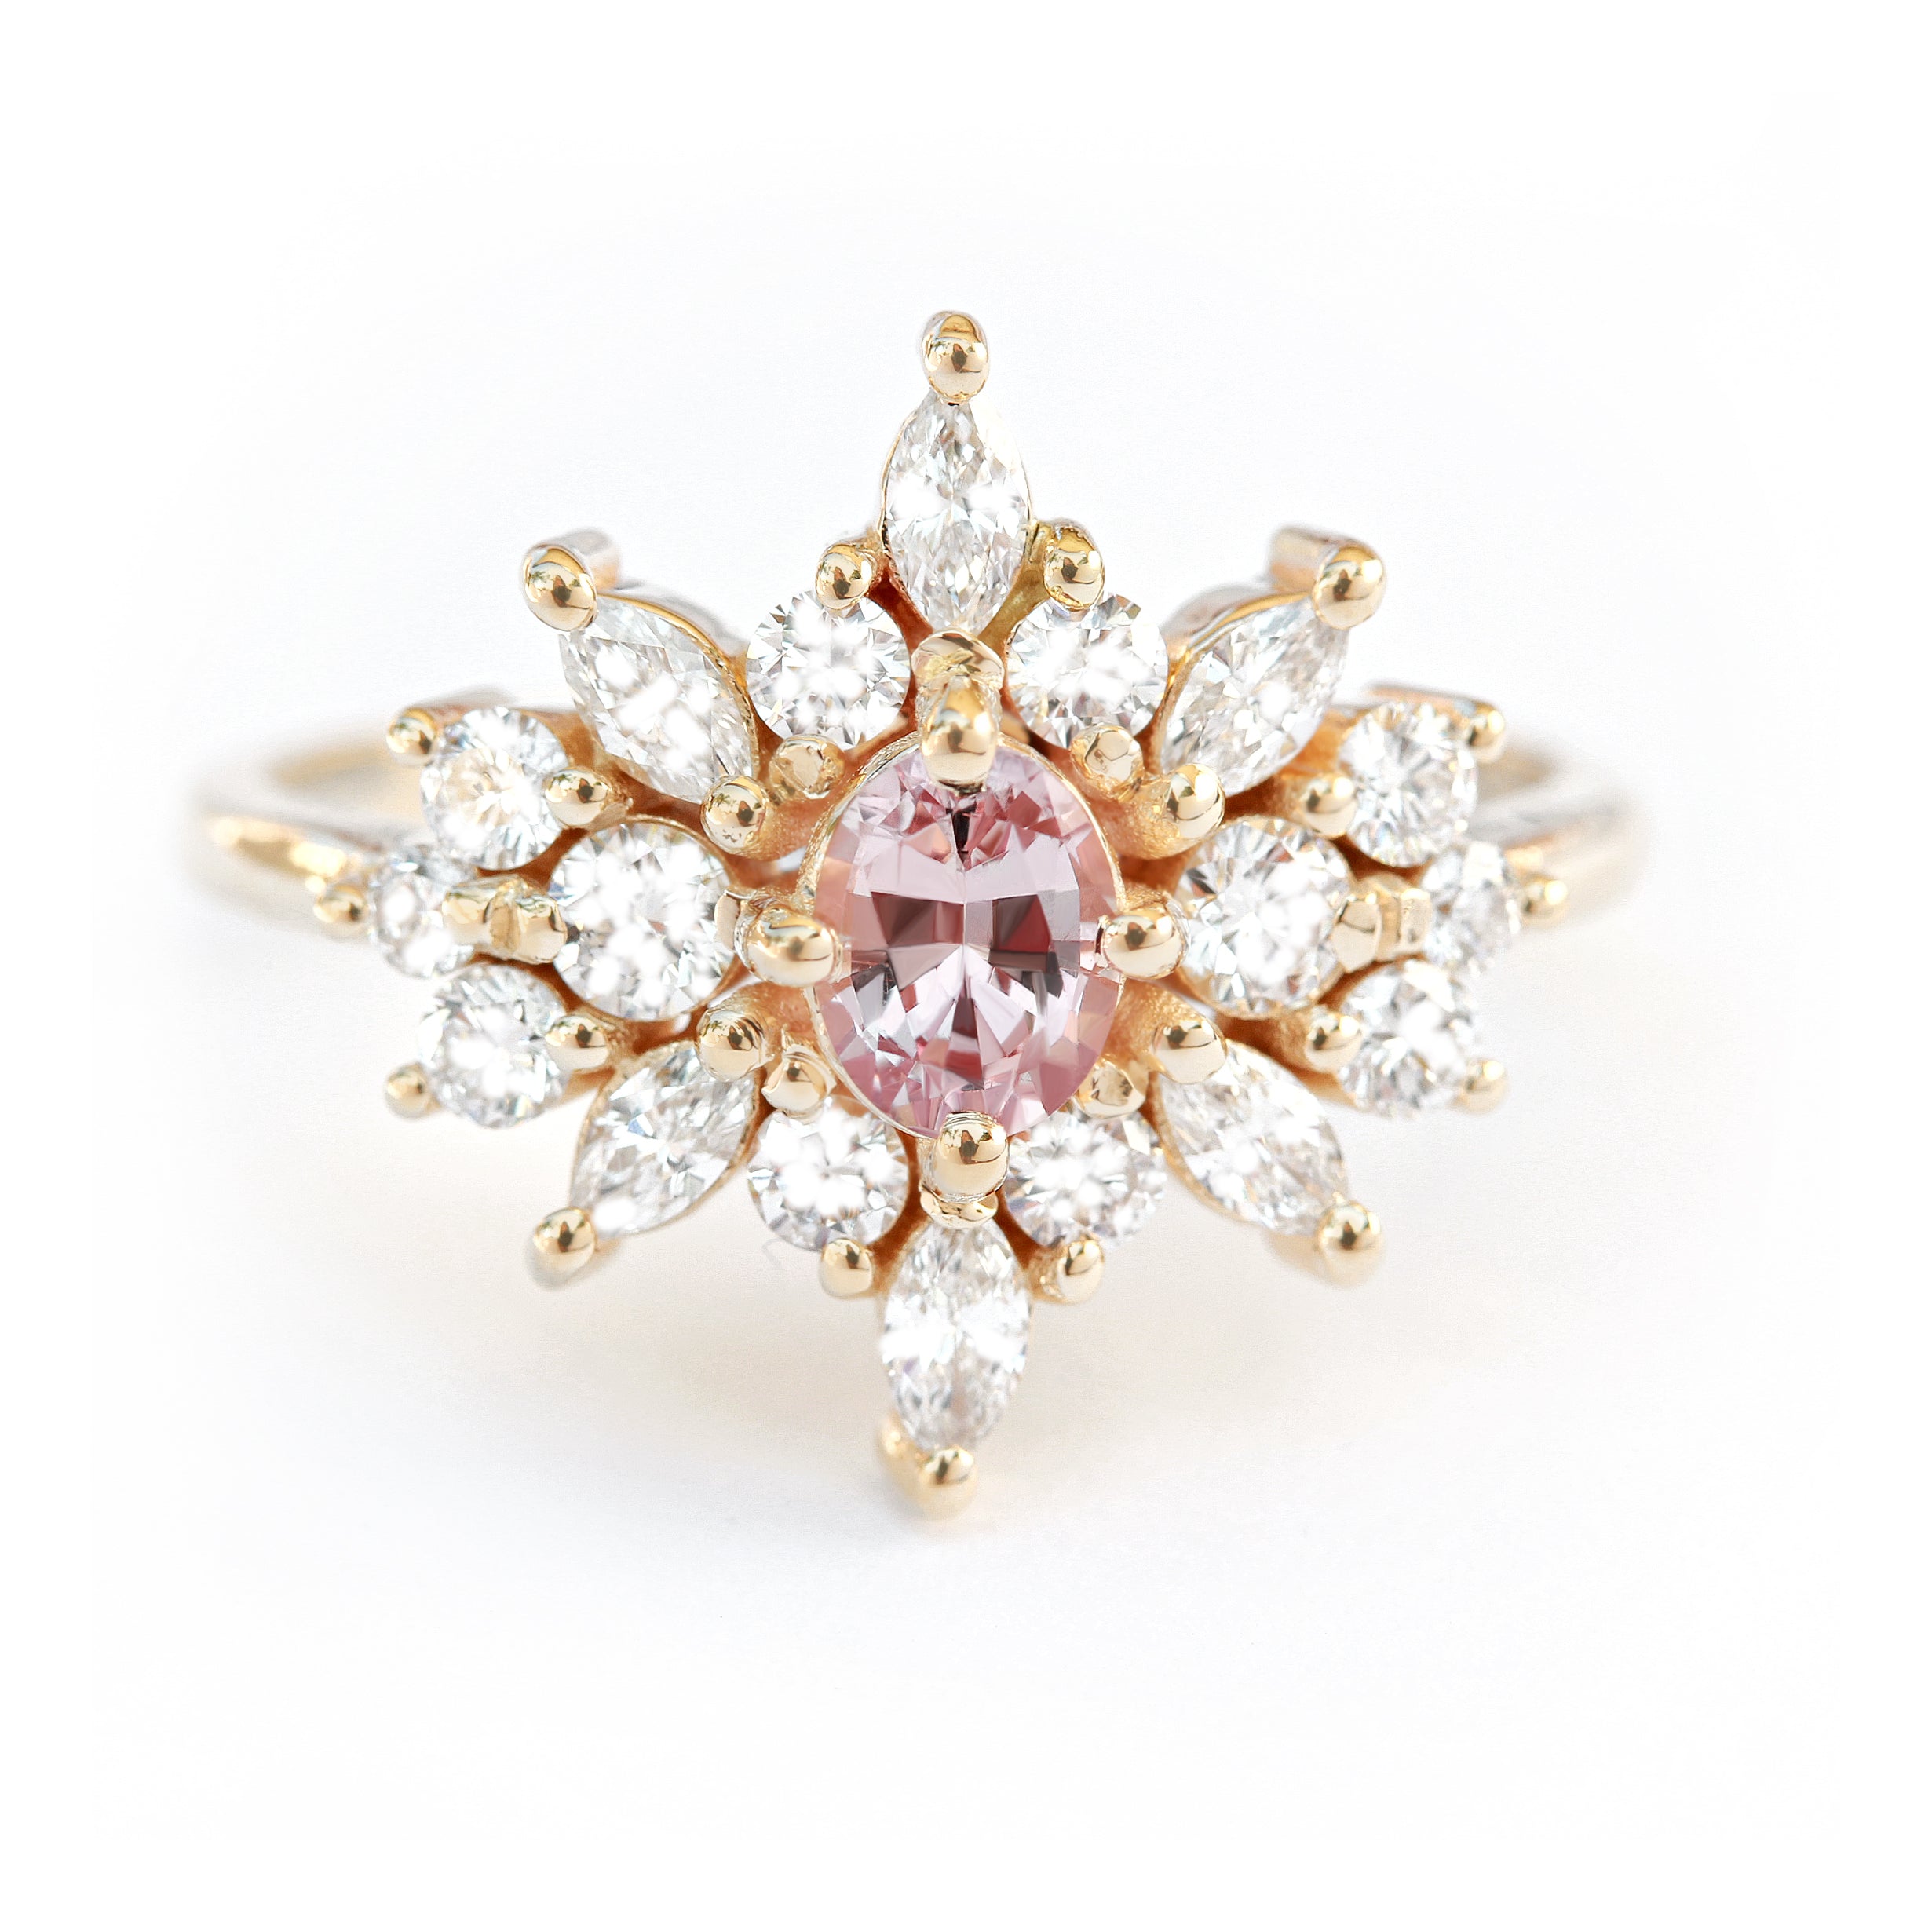 Oval pink sapphire & diamonds engagement ring, Phoenix ♥